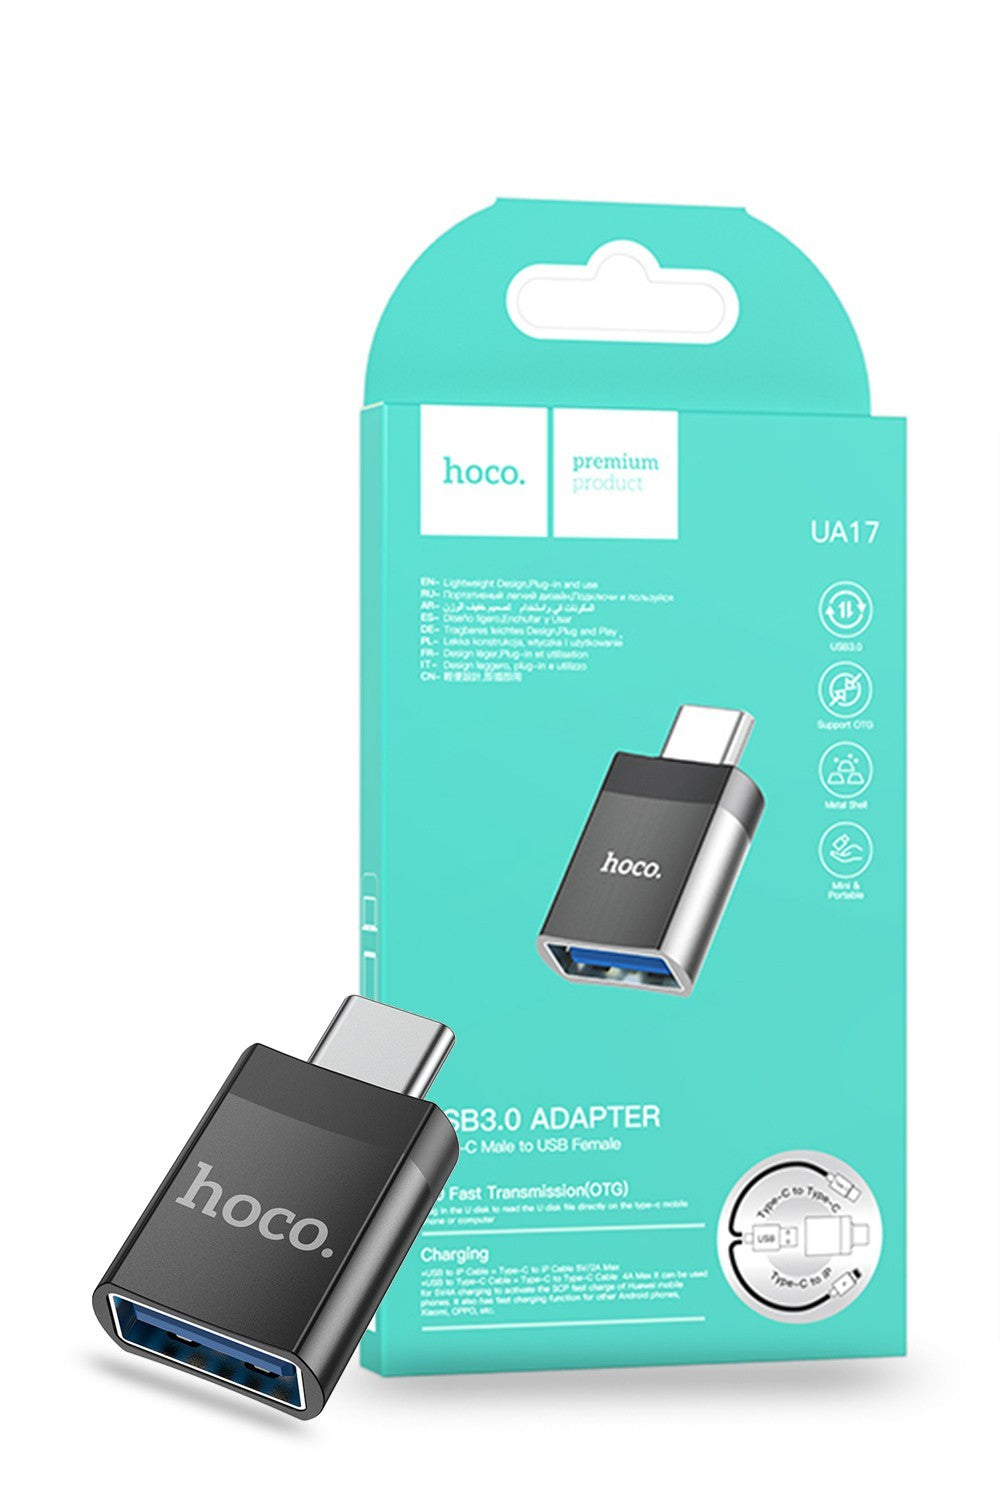 Hoco USB-C Male to USB Female OTG Adapter UA17